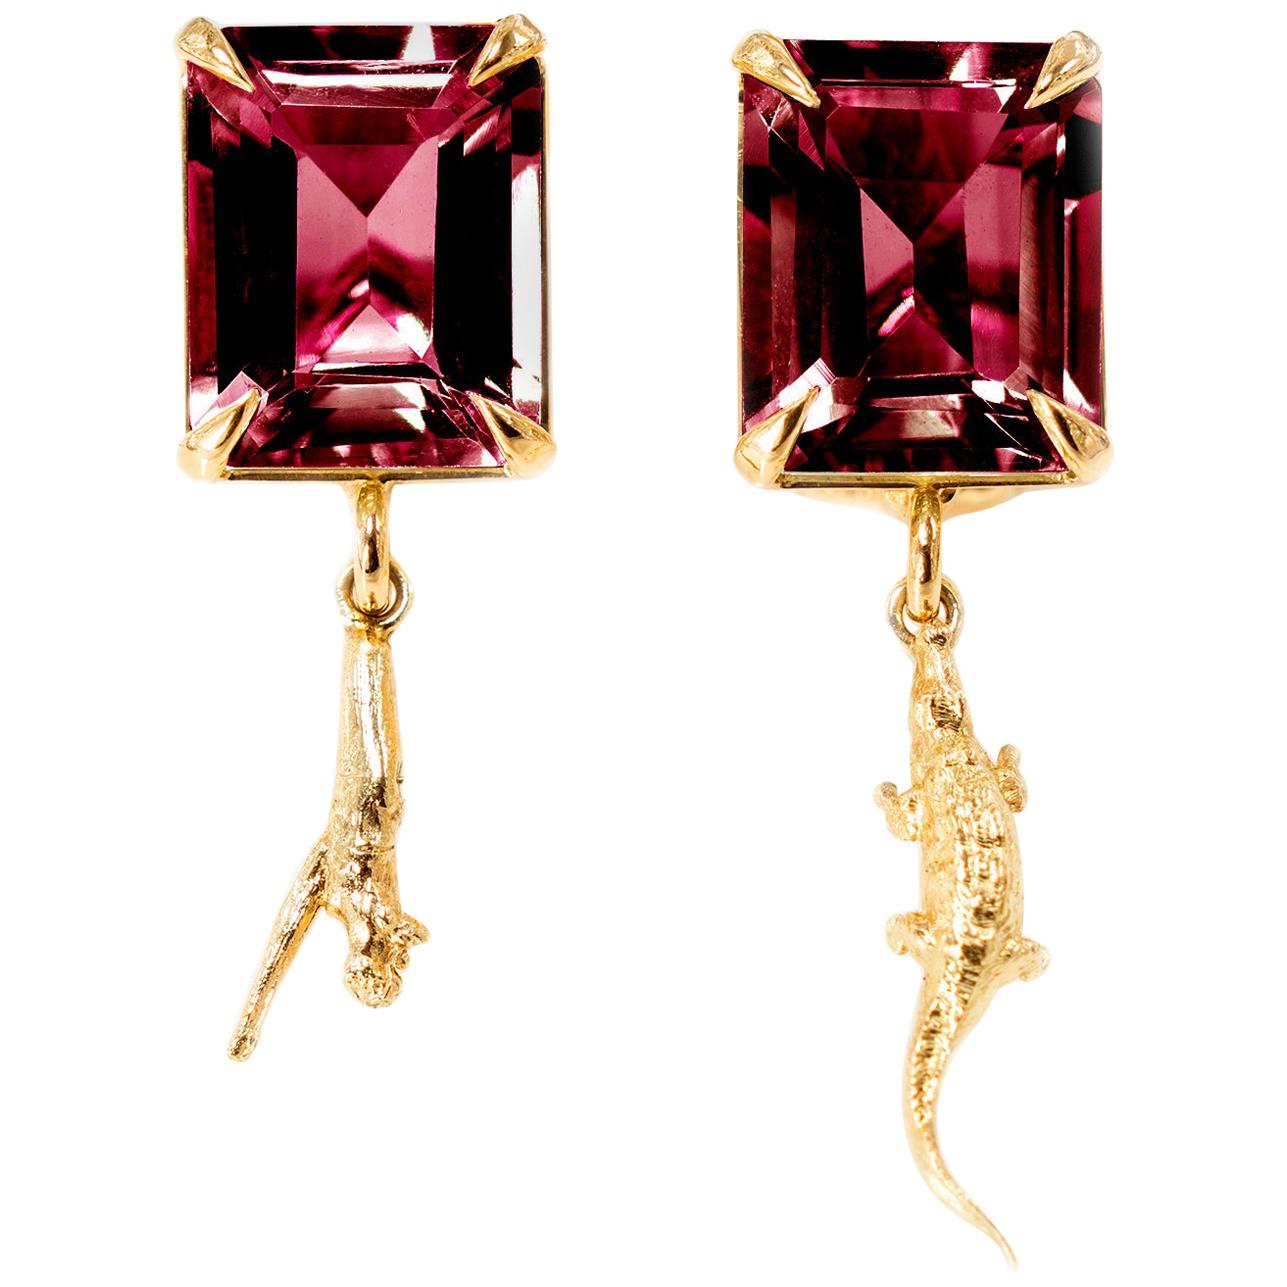 Eighteen Karat Rose Gold Contemporary Earrings with Rhodolite Garnets